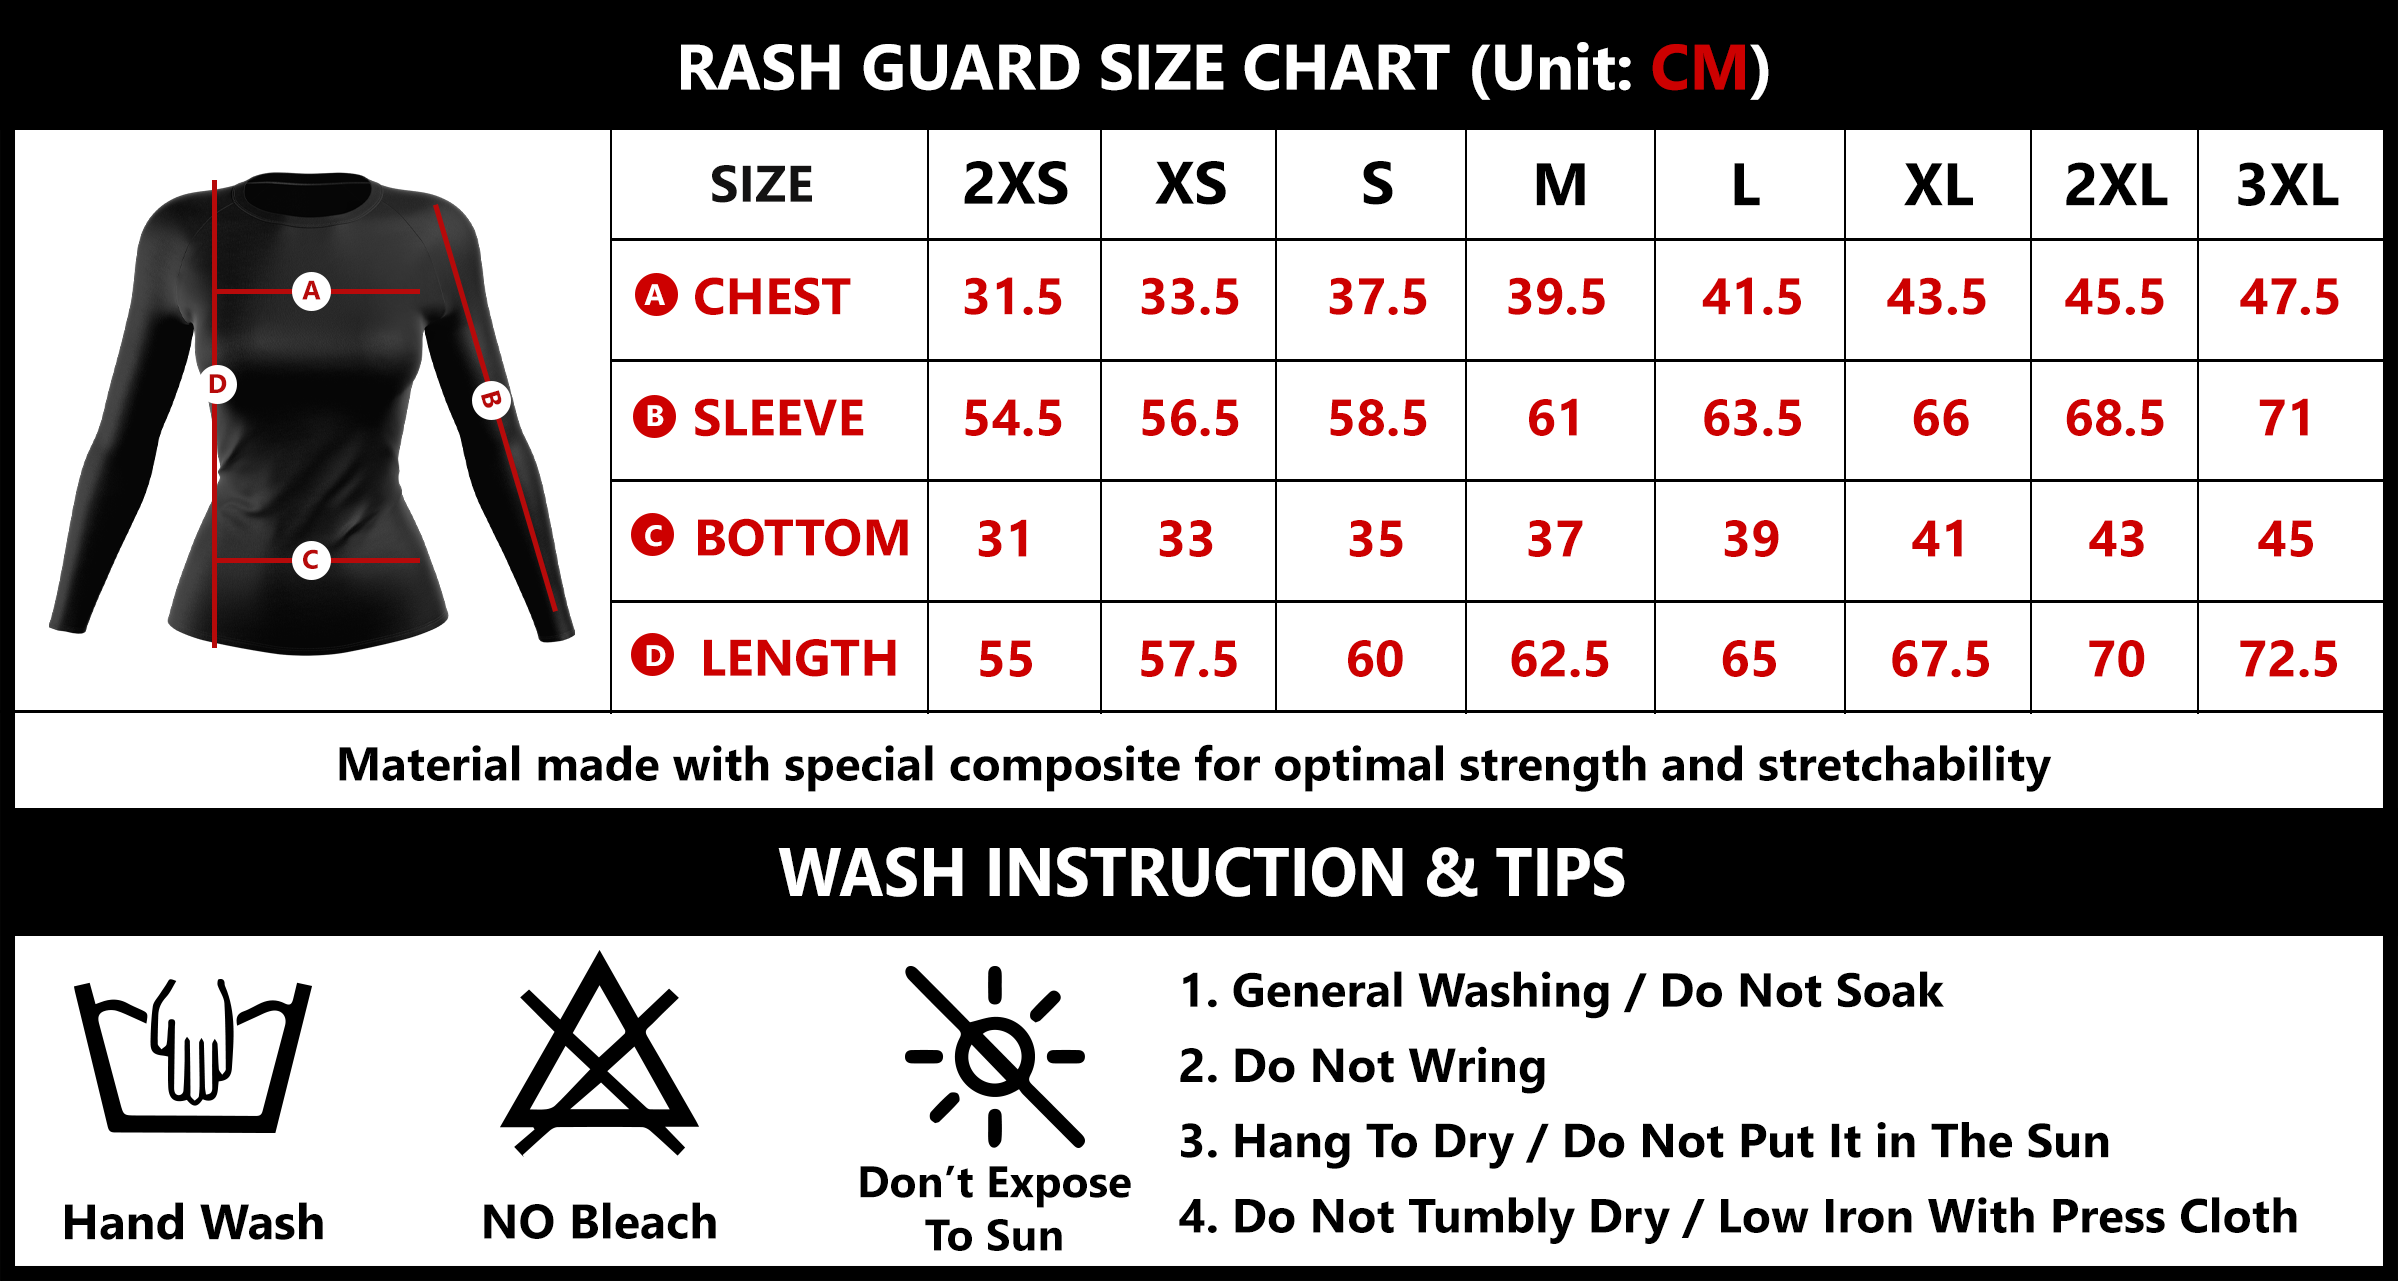 Rashguard Size Chart